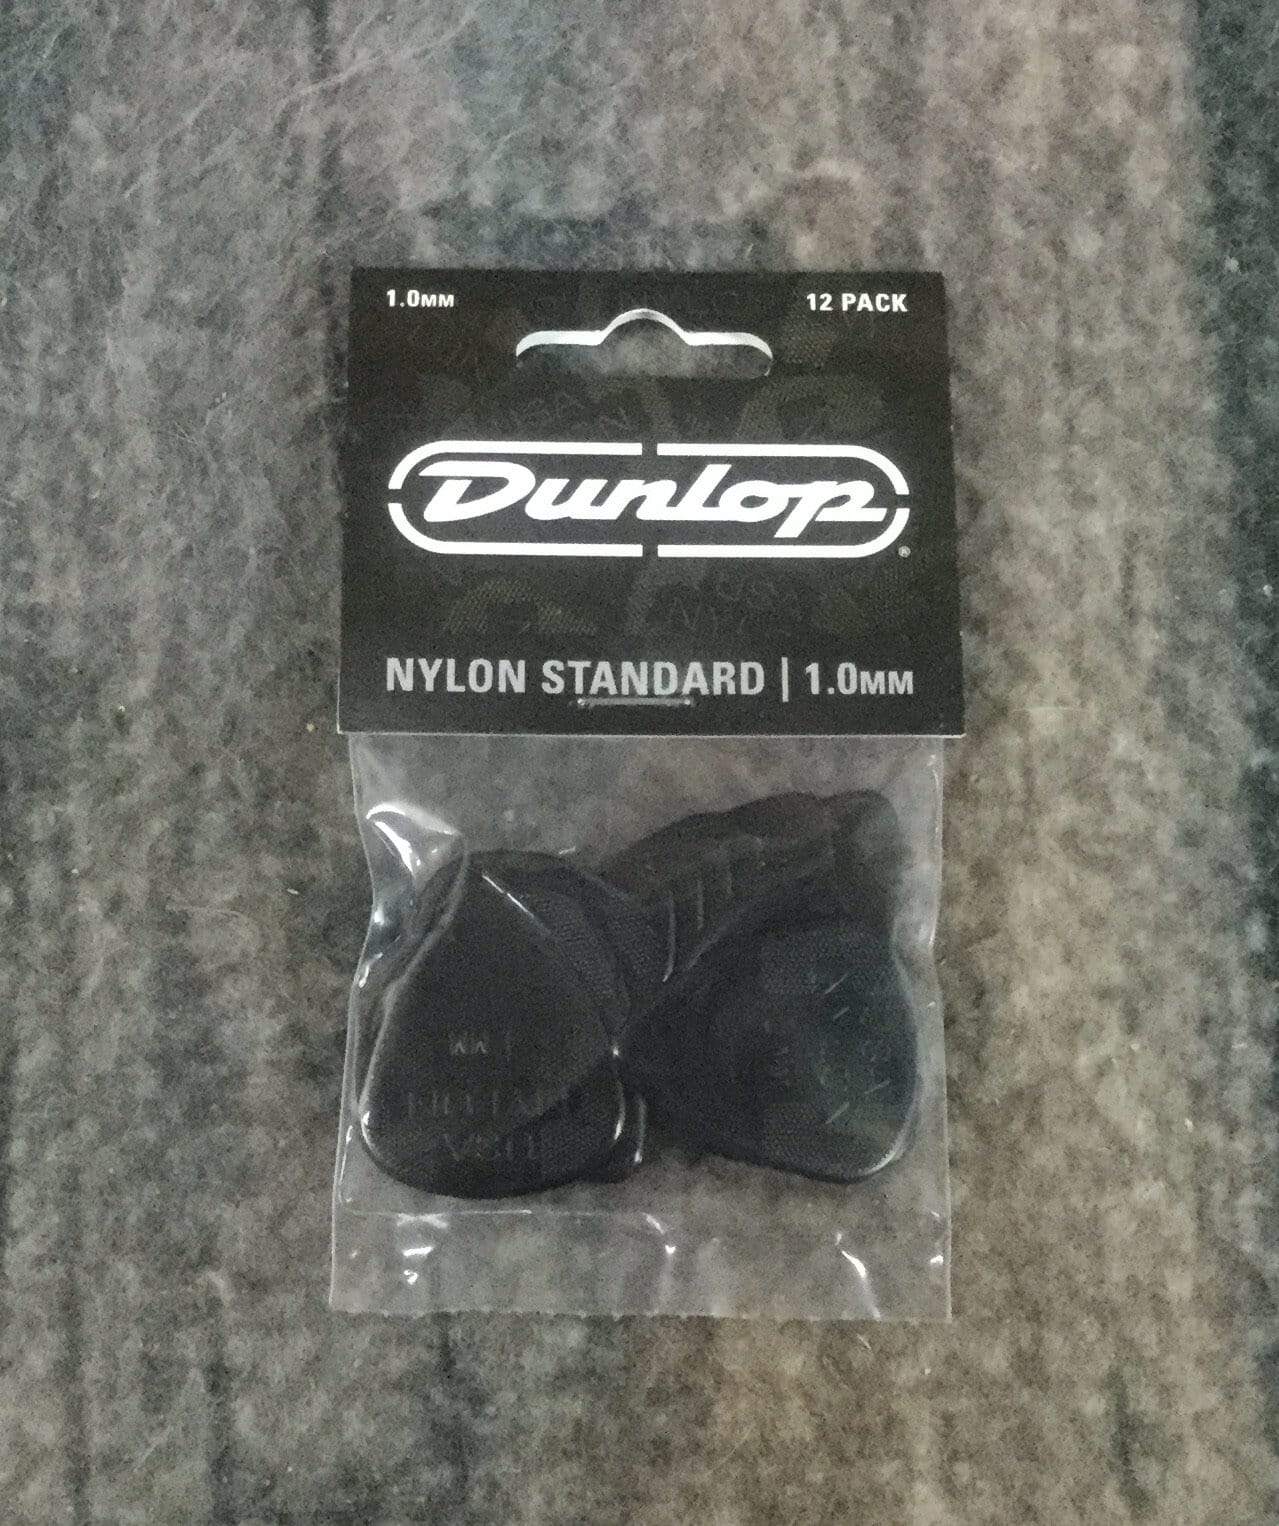 Dunlop Pick Dunlop Nylon Standard 1.0mm 44P1.0 Pick Pack